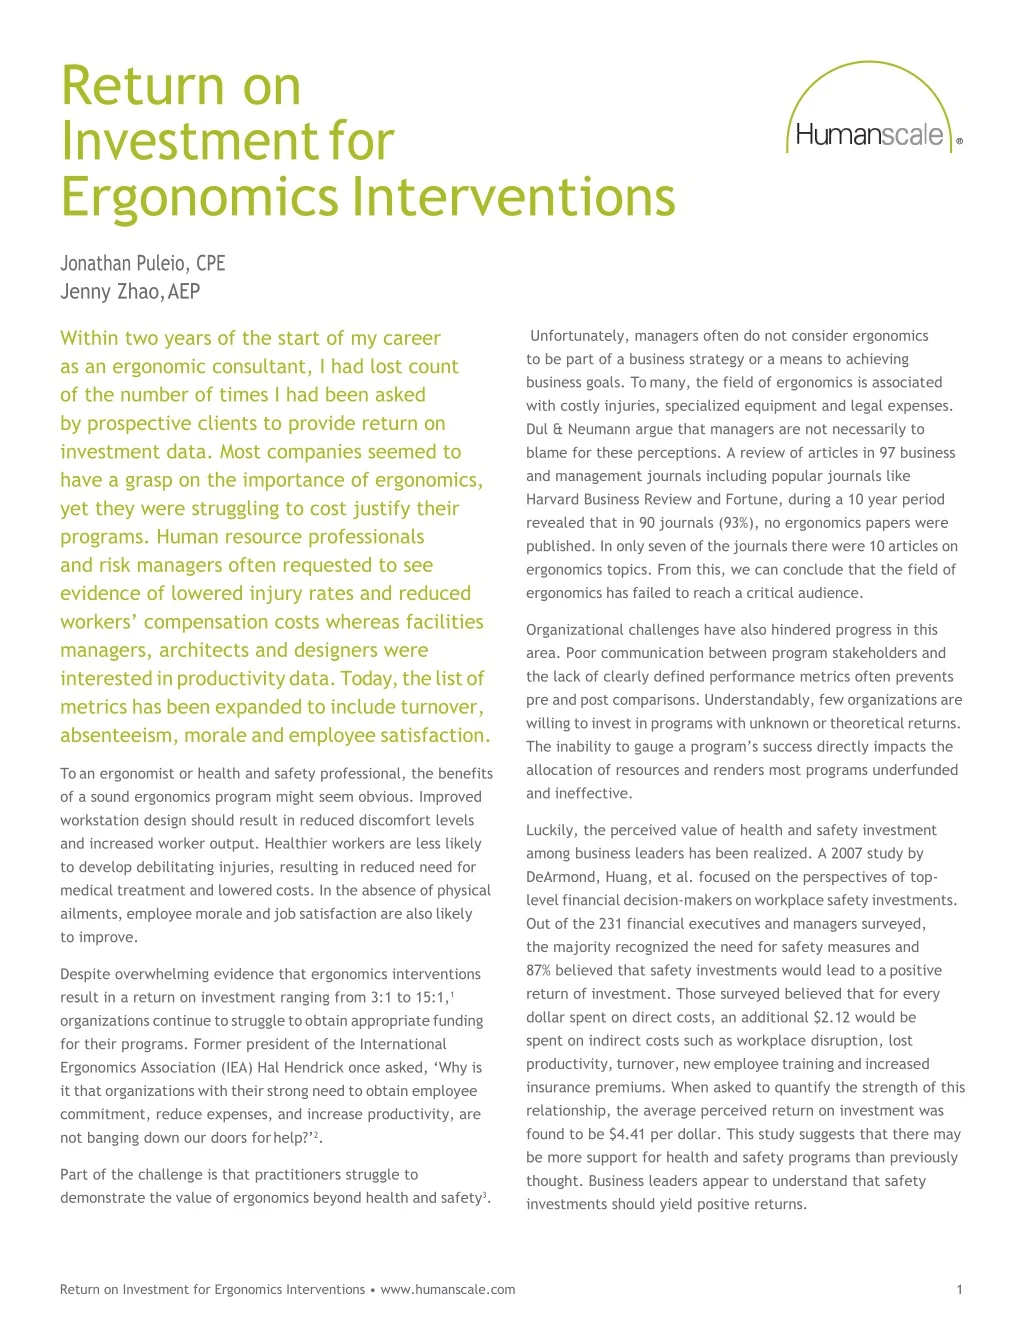 return on investment for ergonomics interventions